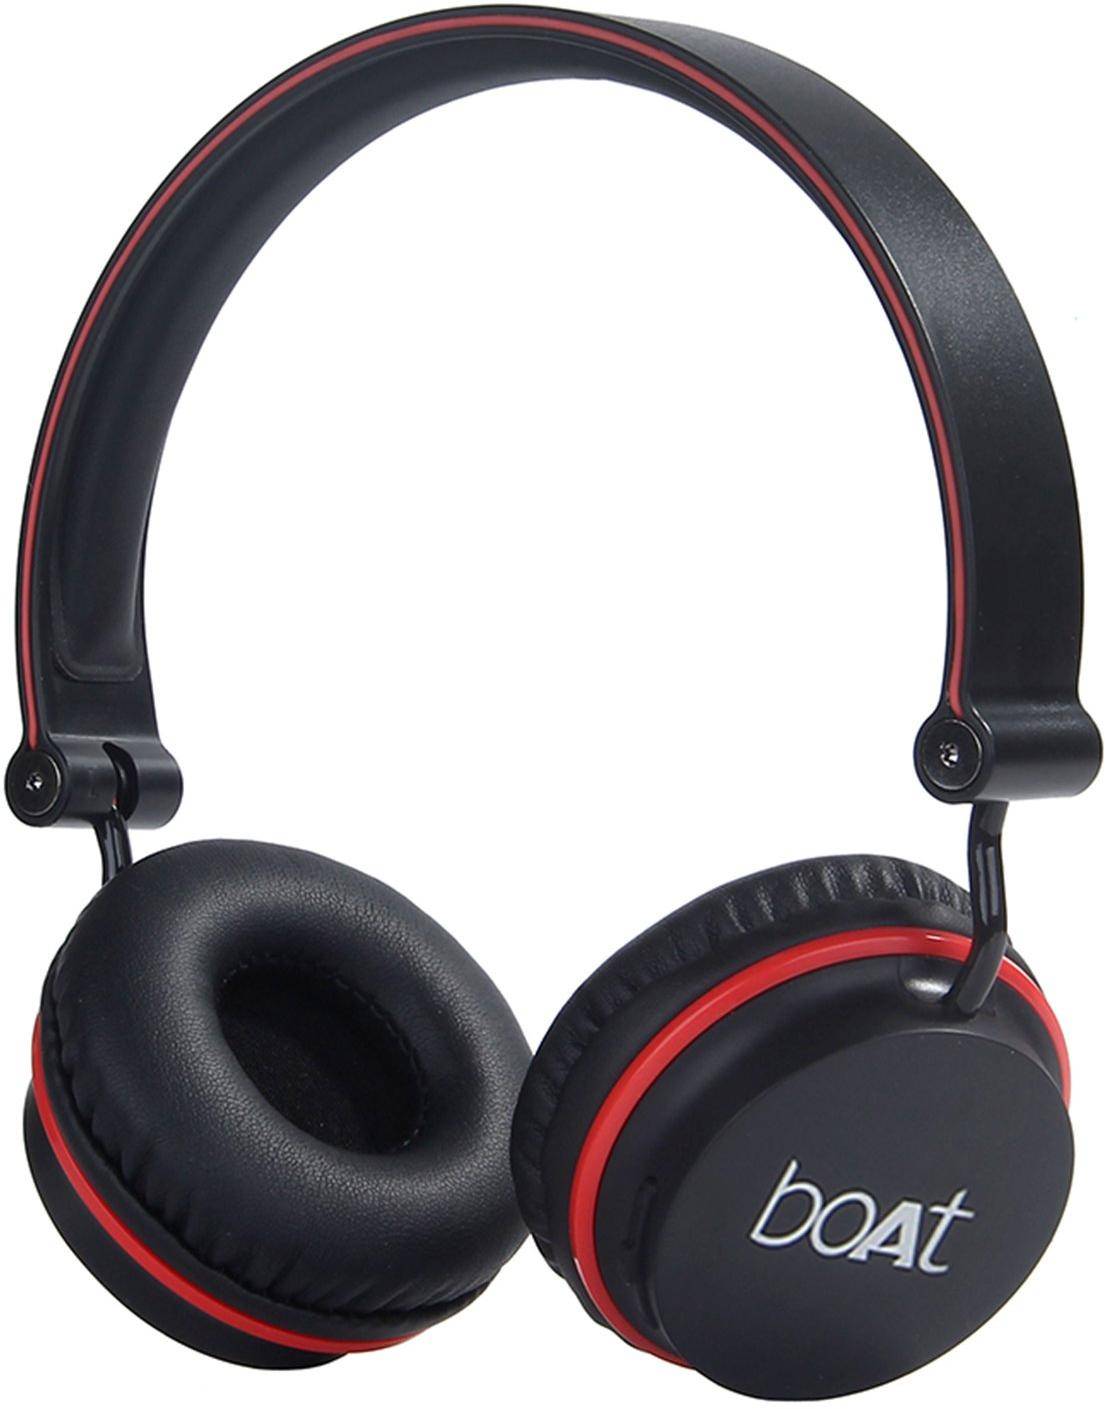 Boat Rockerz 400 On Ear Bluetooth Headphones With Mic zoom image